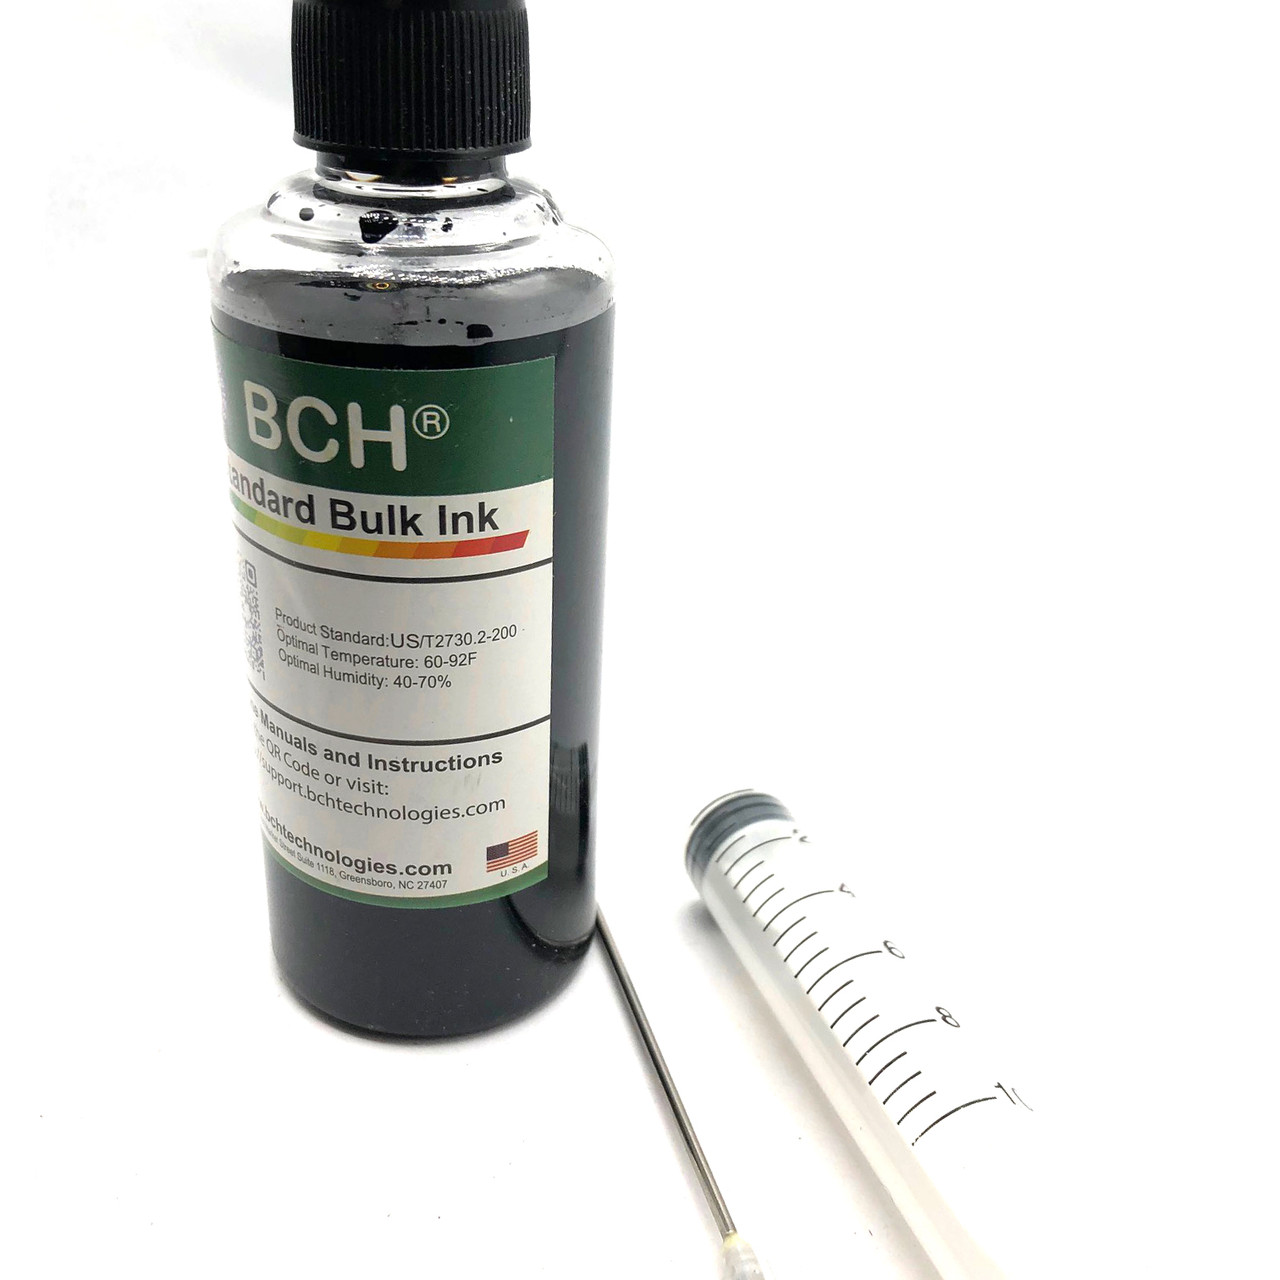 BCH Refill Ink Black for Inkjet Printer Cartridge - Standard Grade, Save by  Buying Bulk - 500 ml Bottle (16.9 oz) - H Series